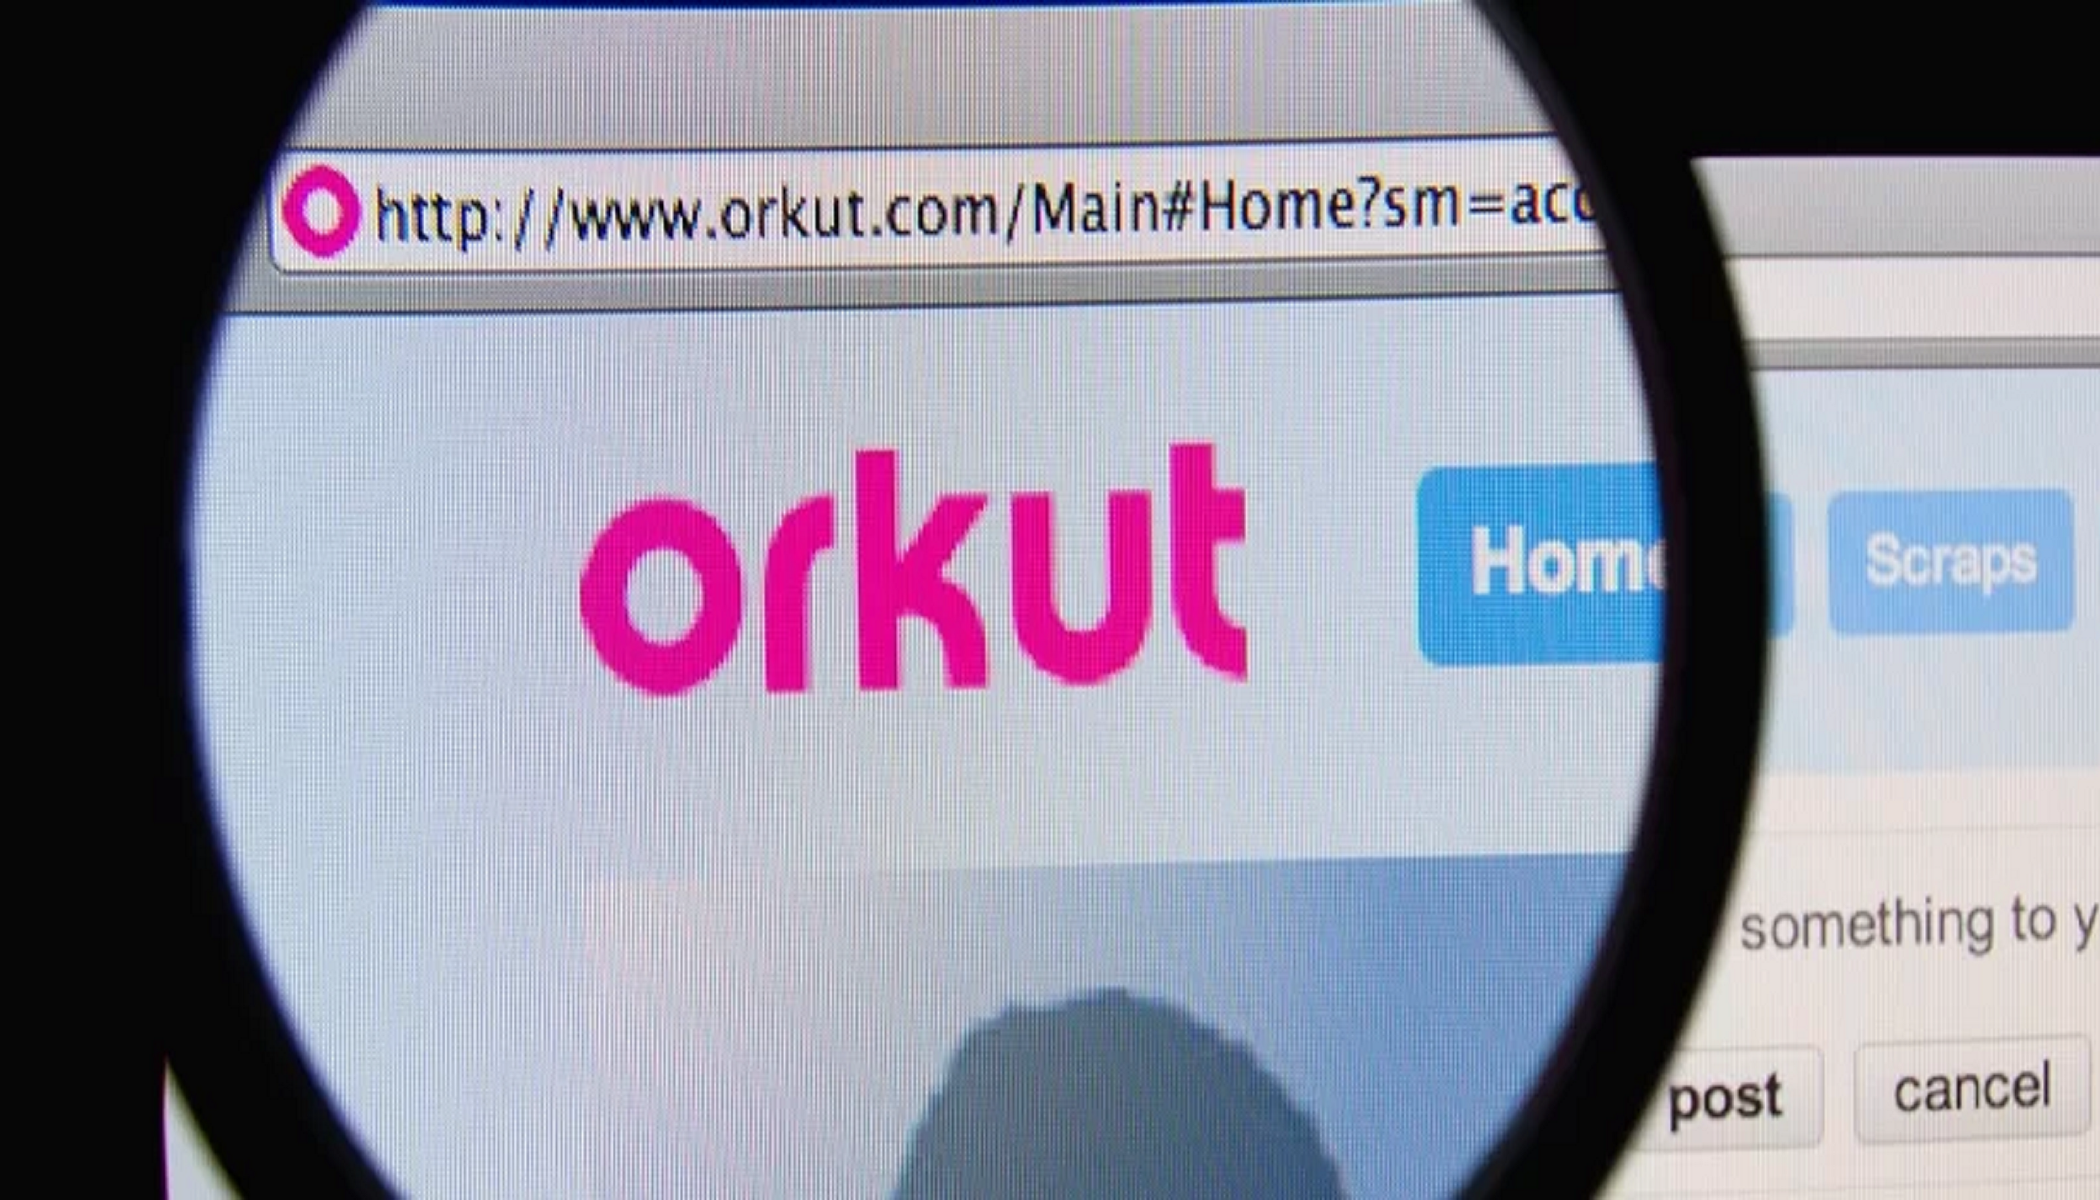 Fundador do Orkut reativa domínio e ensaia volta de rede social: 'Estamos construindo algo novo'